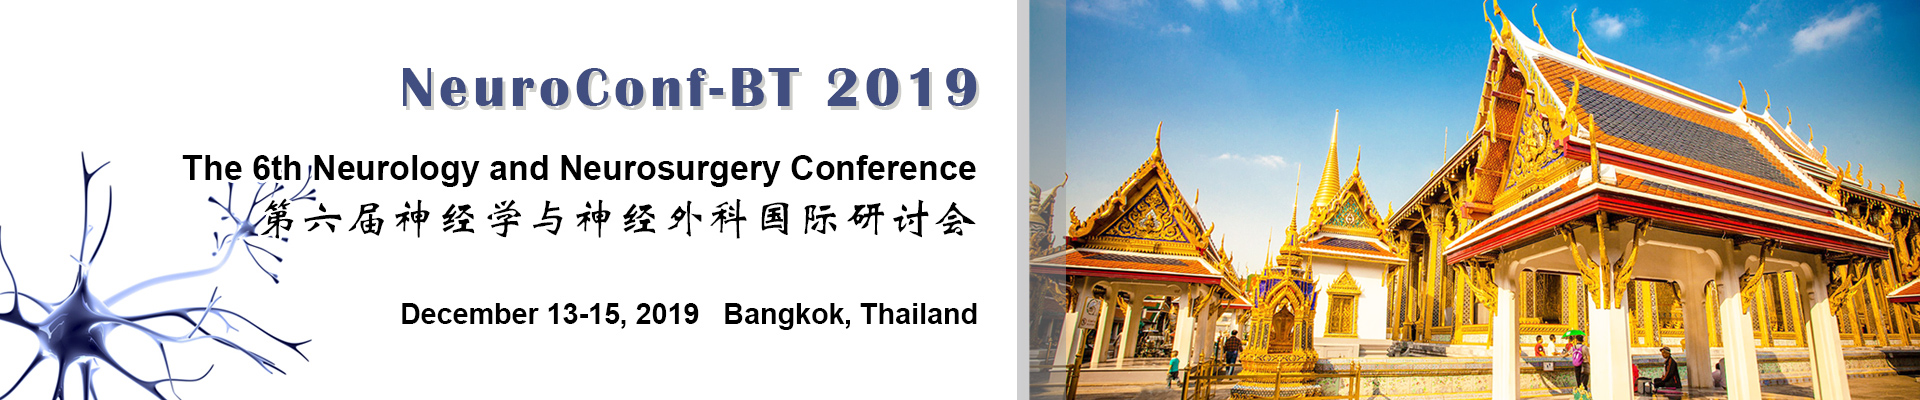 The 6th Neurology and Neurosurgery Conference (NeuroConf-BT 2019), Bangkok, Thailand